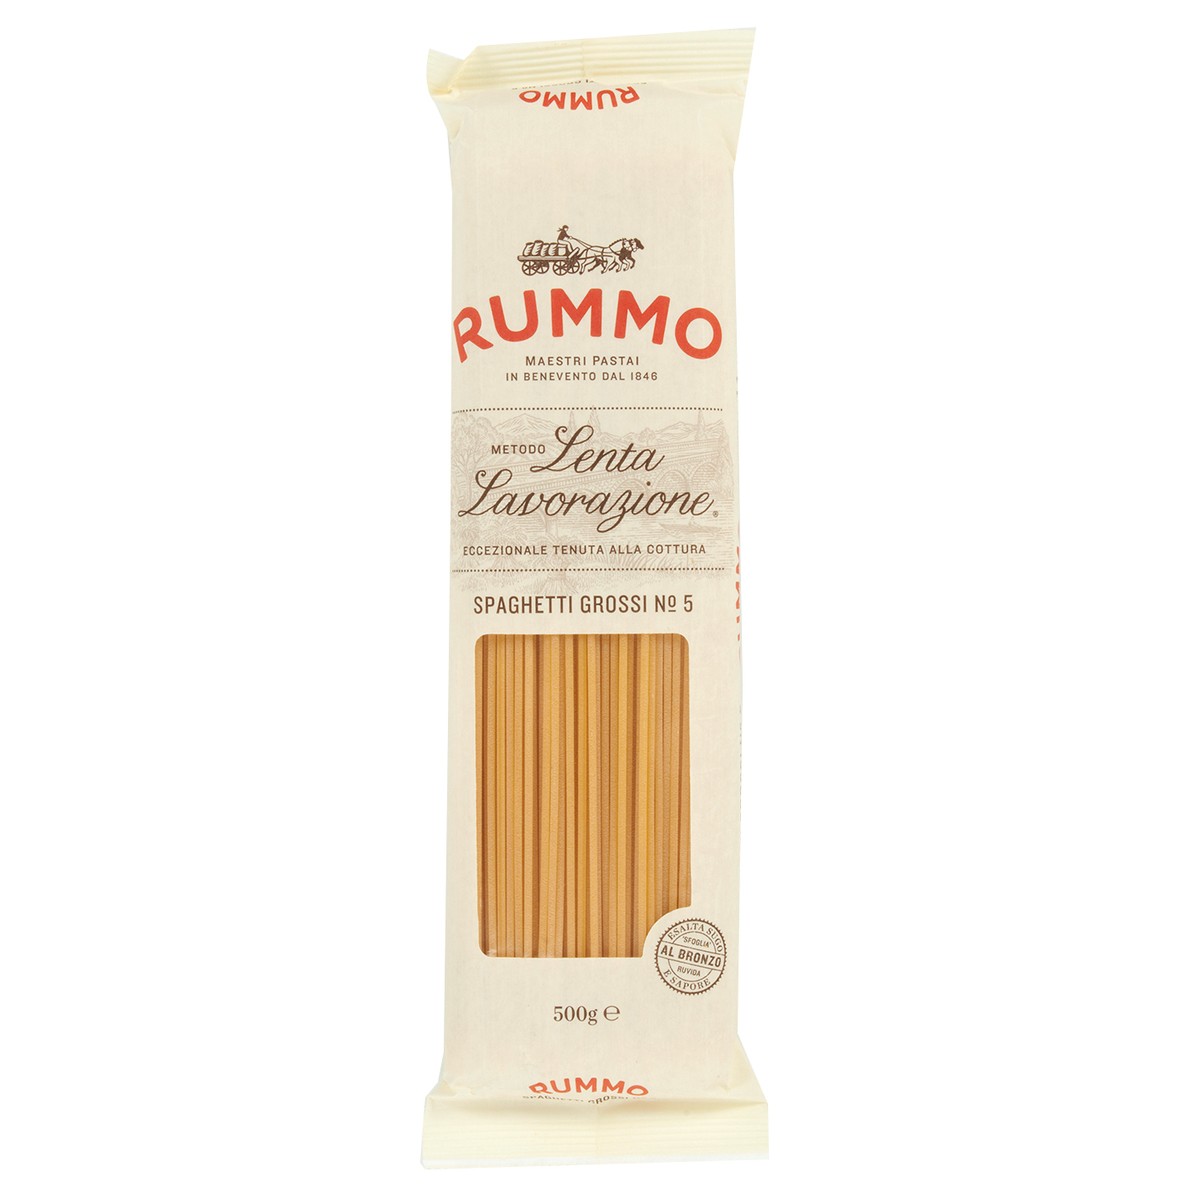 RUMMO Spaghetti grossi n.5